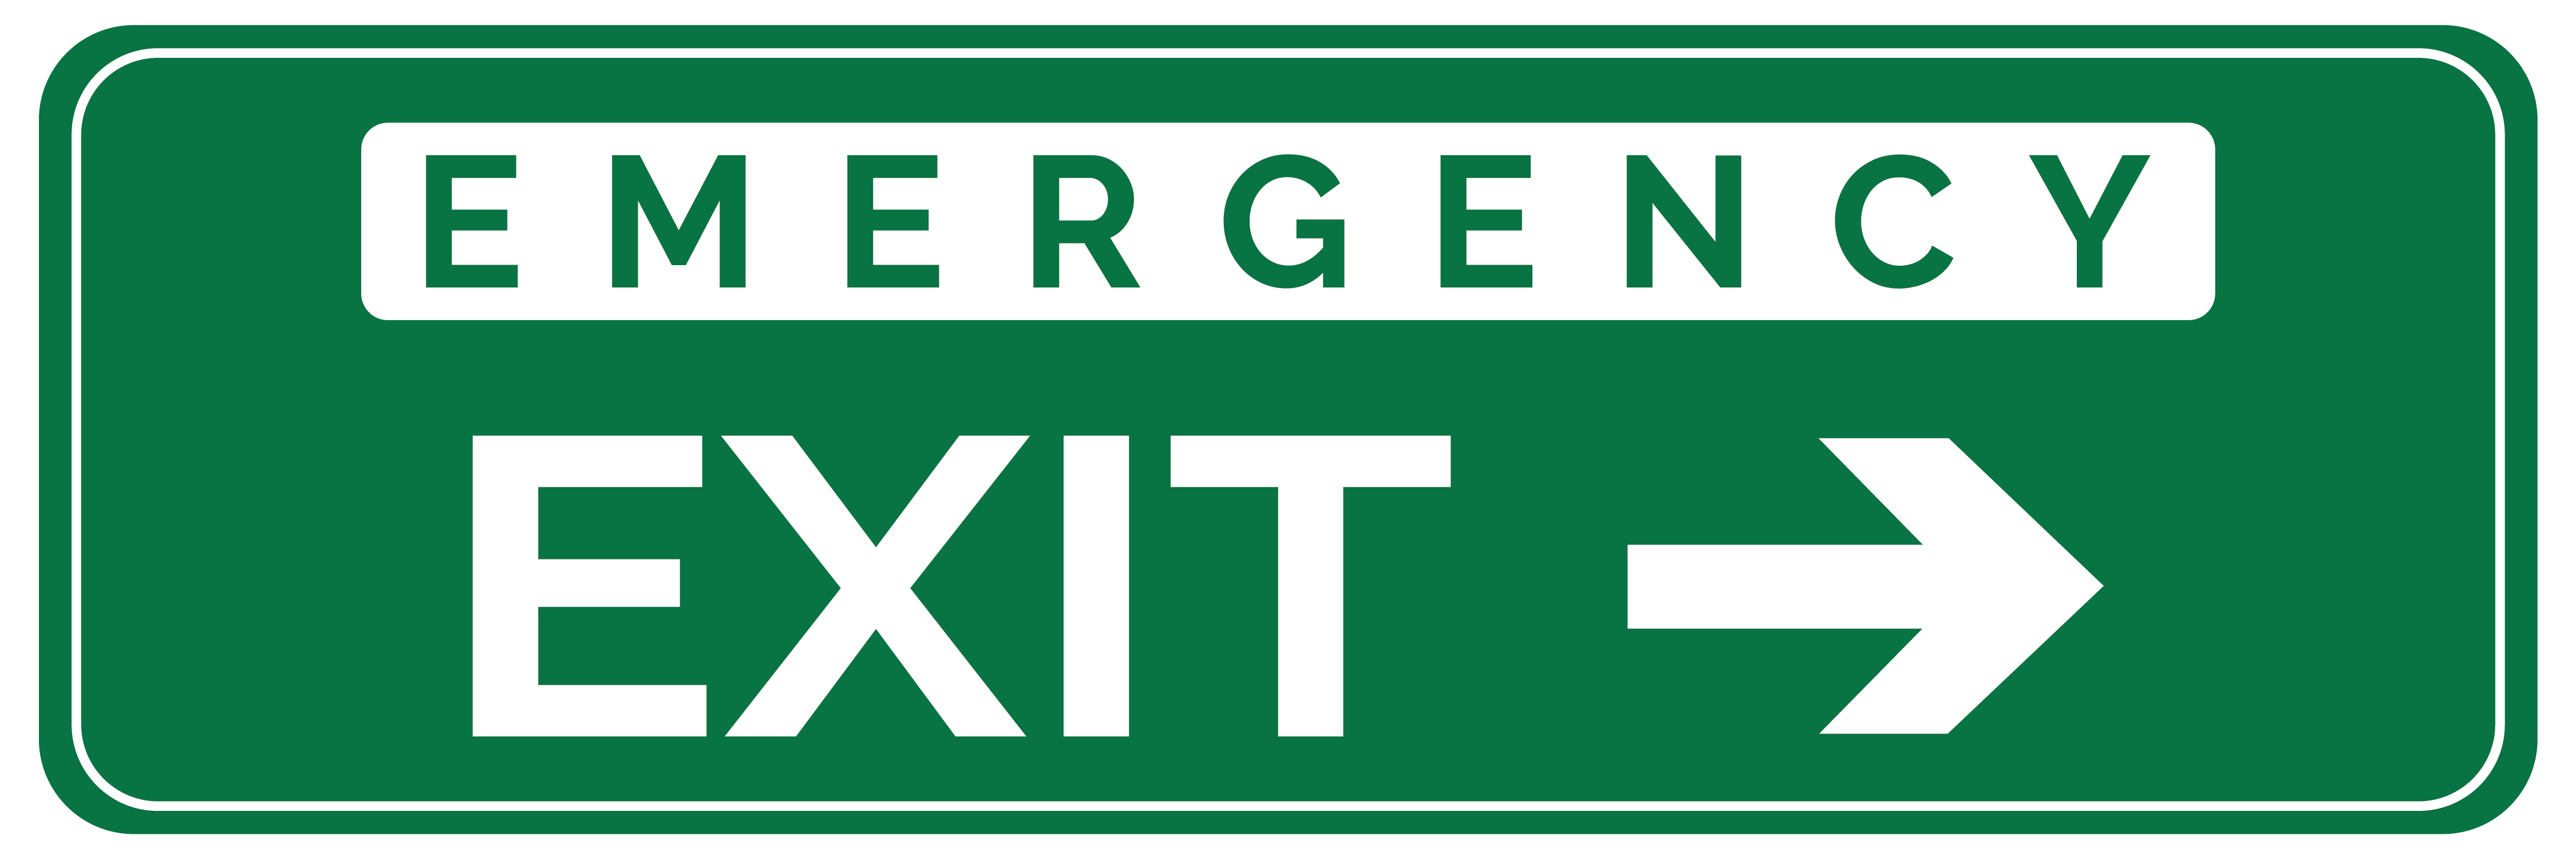 Exit sticker emergency right - Pictogram vinyl sticker